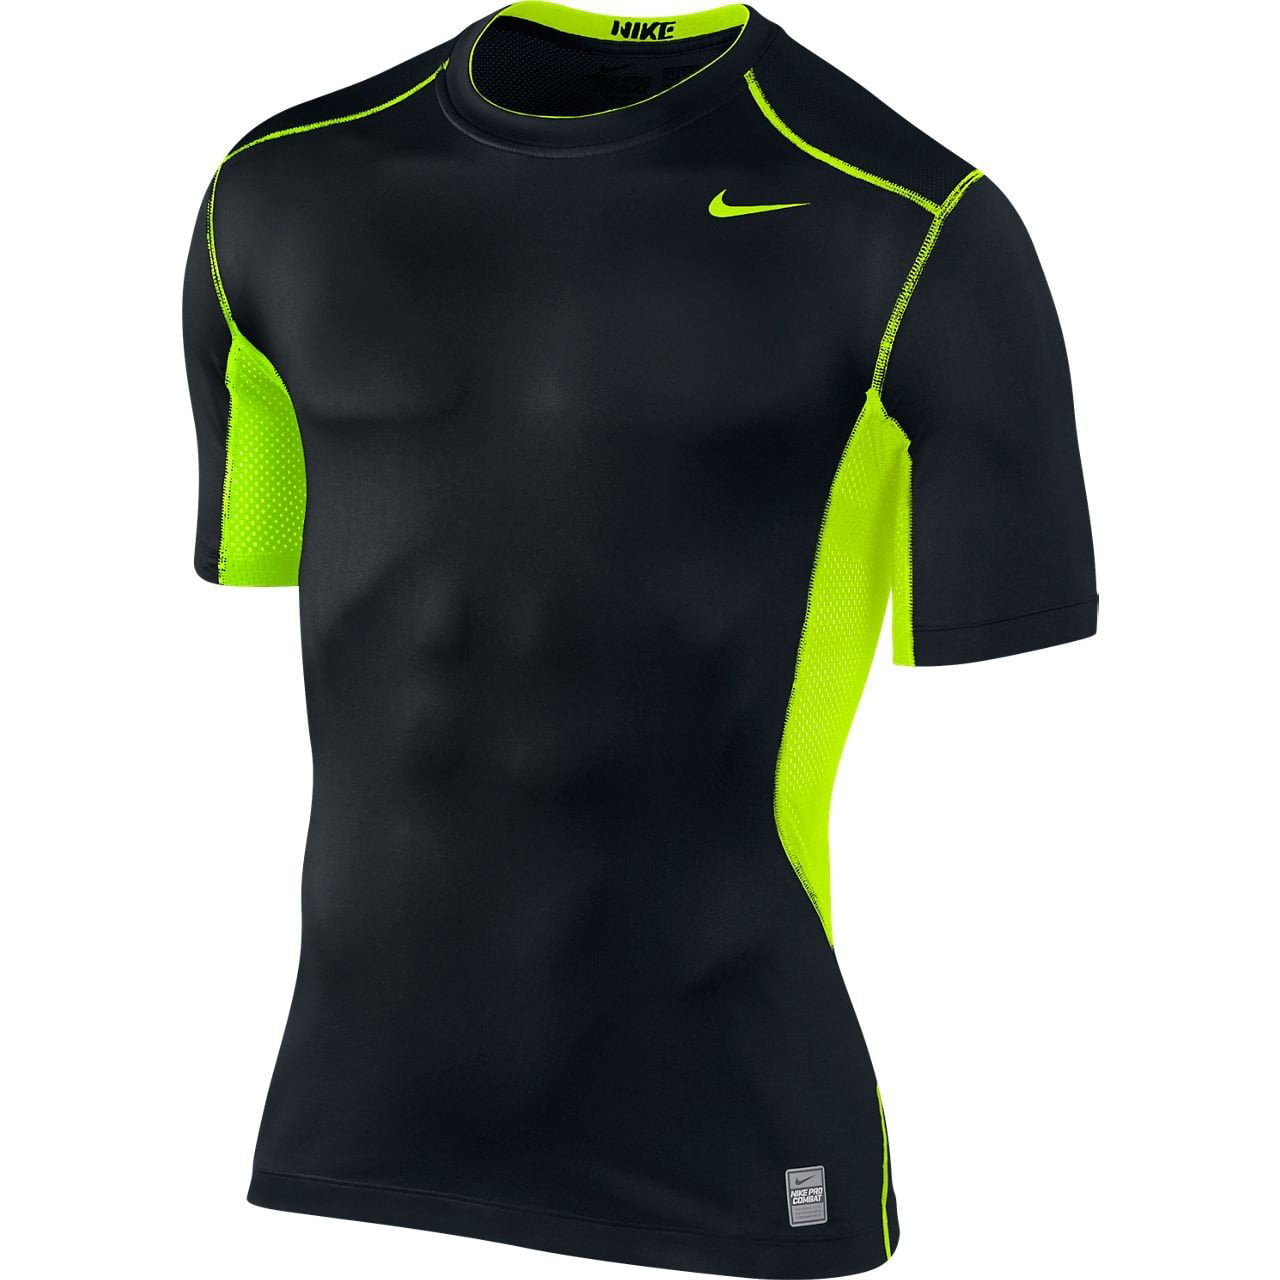 Nike Men's Pro Combat Hypercool 2.0 Fitted Short-Sleeve Top Shirt,  Black/Volt, Large